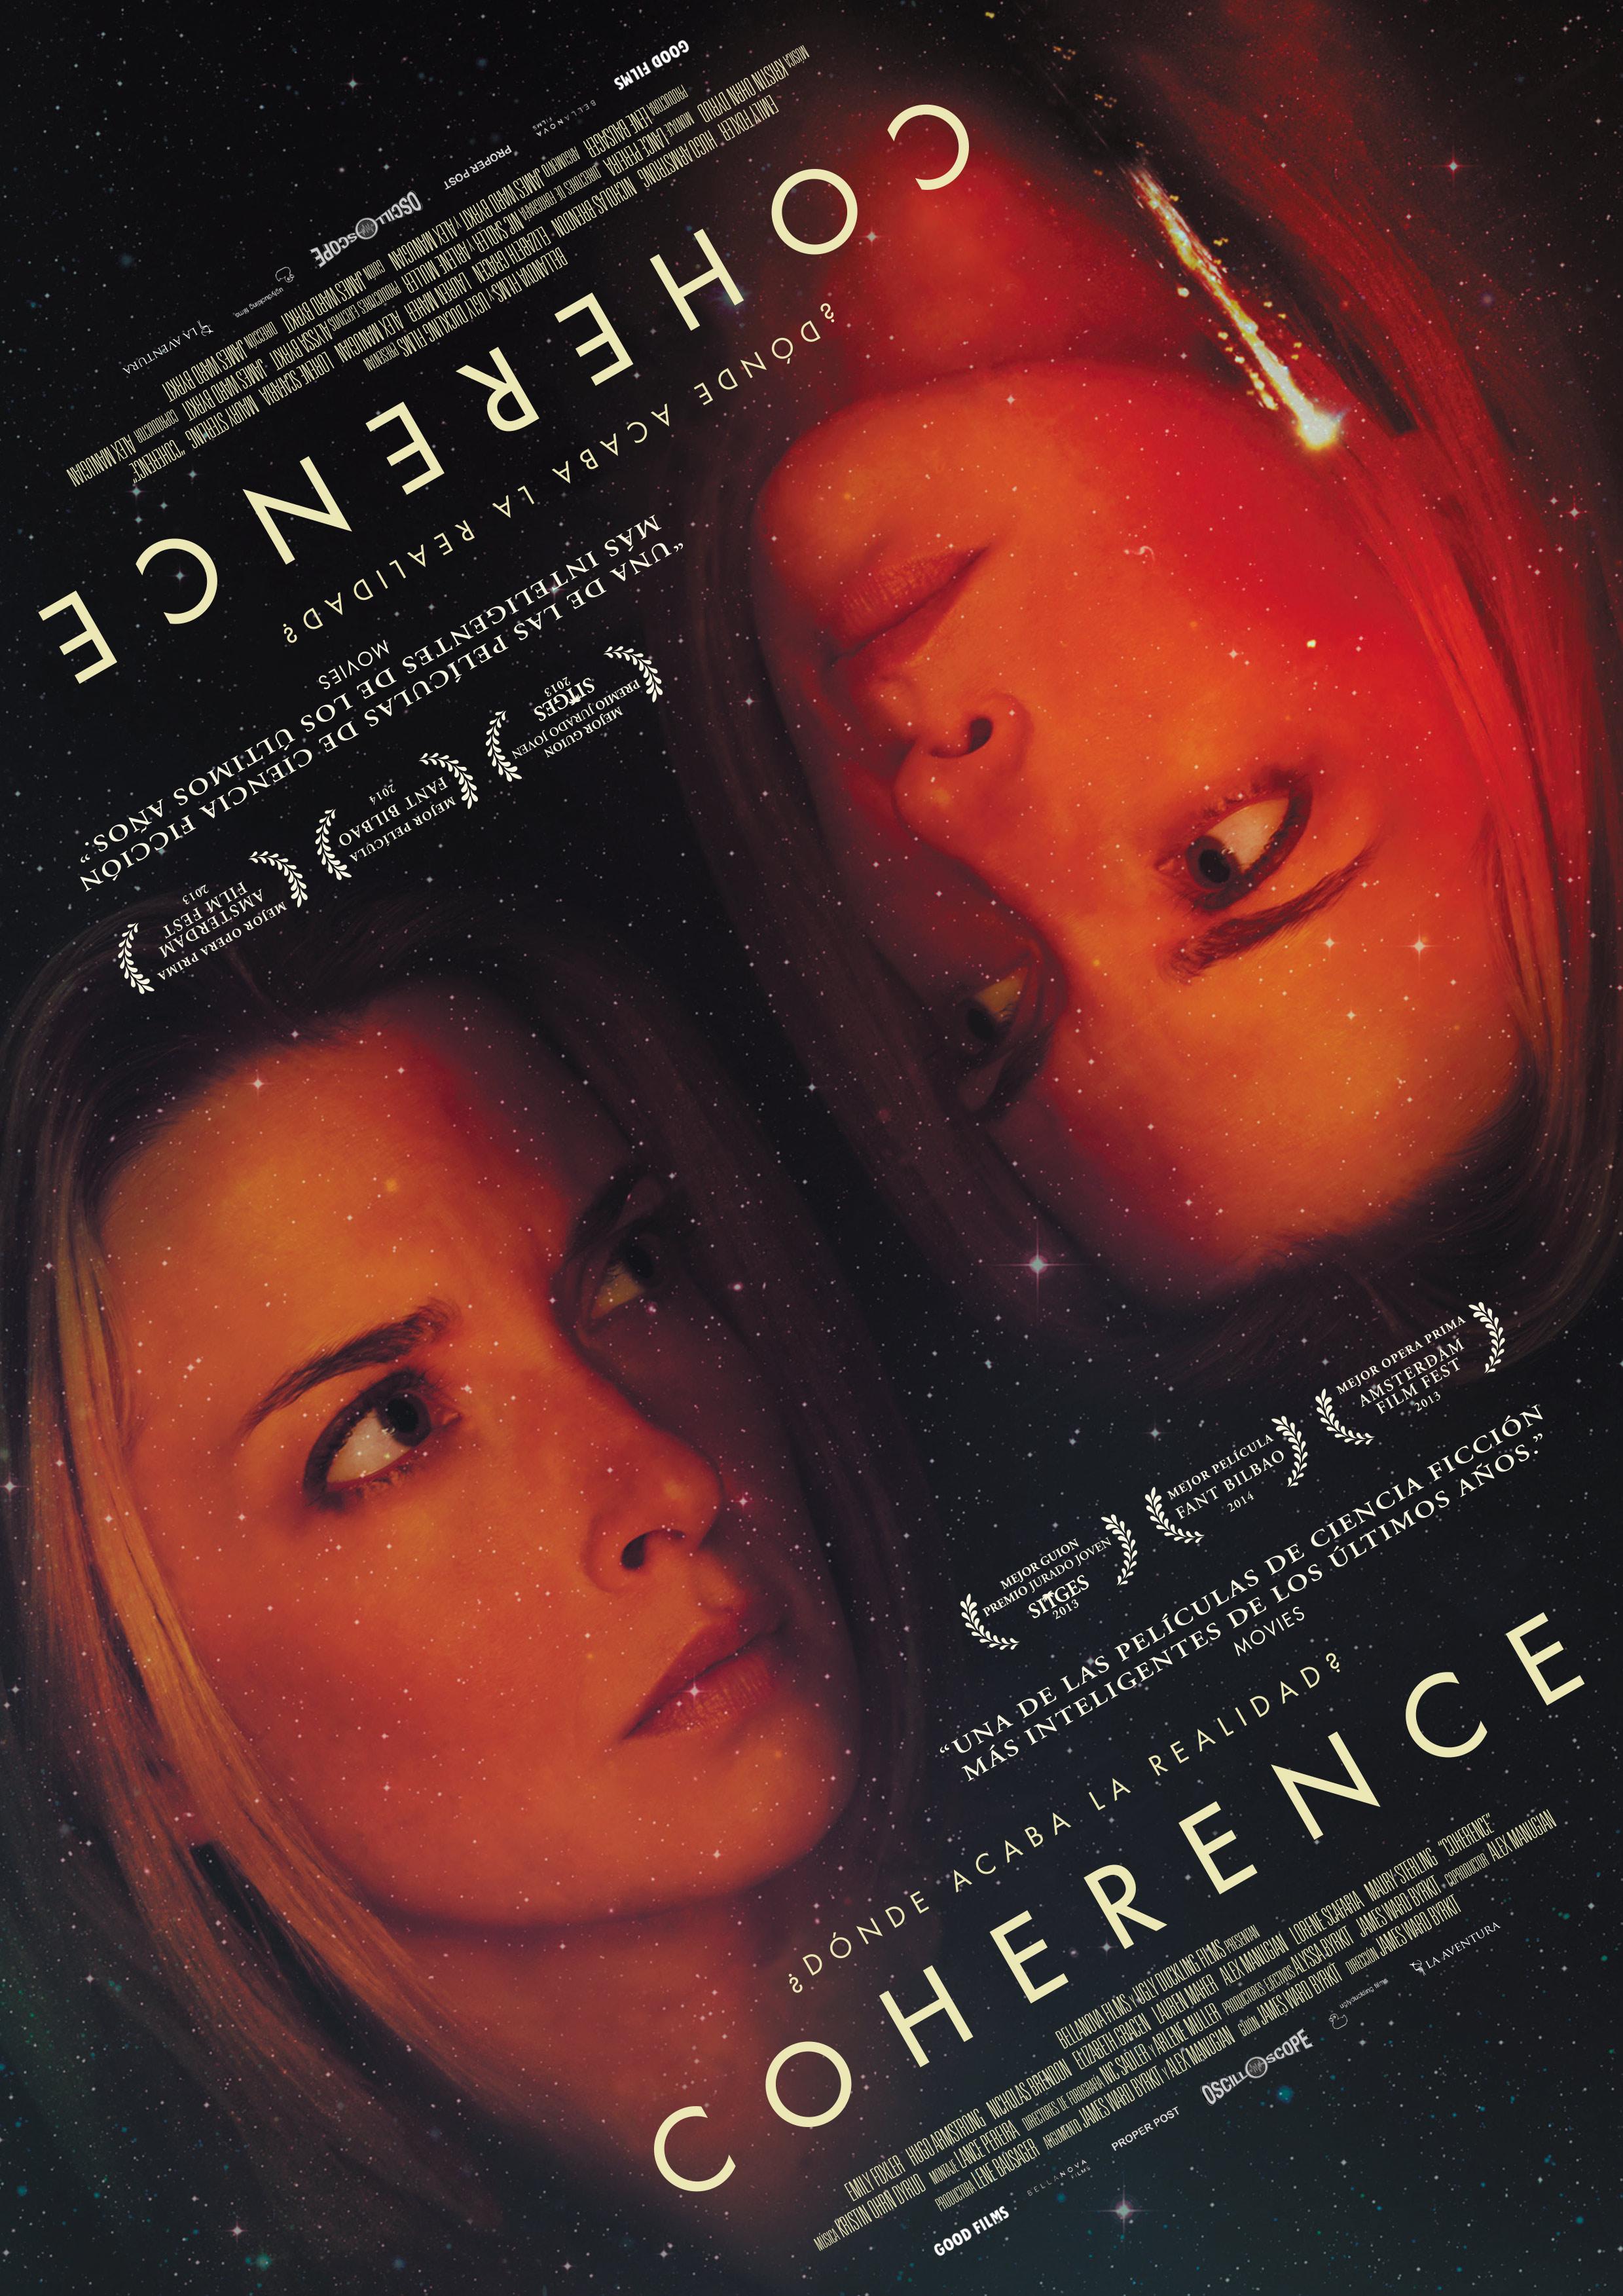 Постер фильма Связь | Coherence